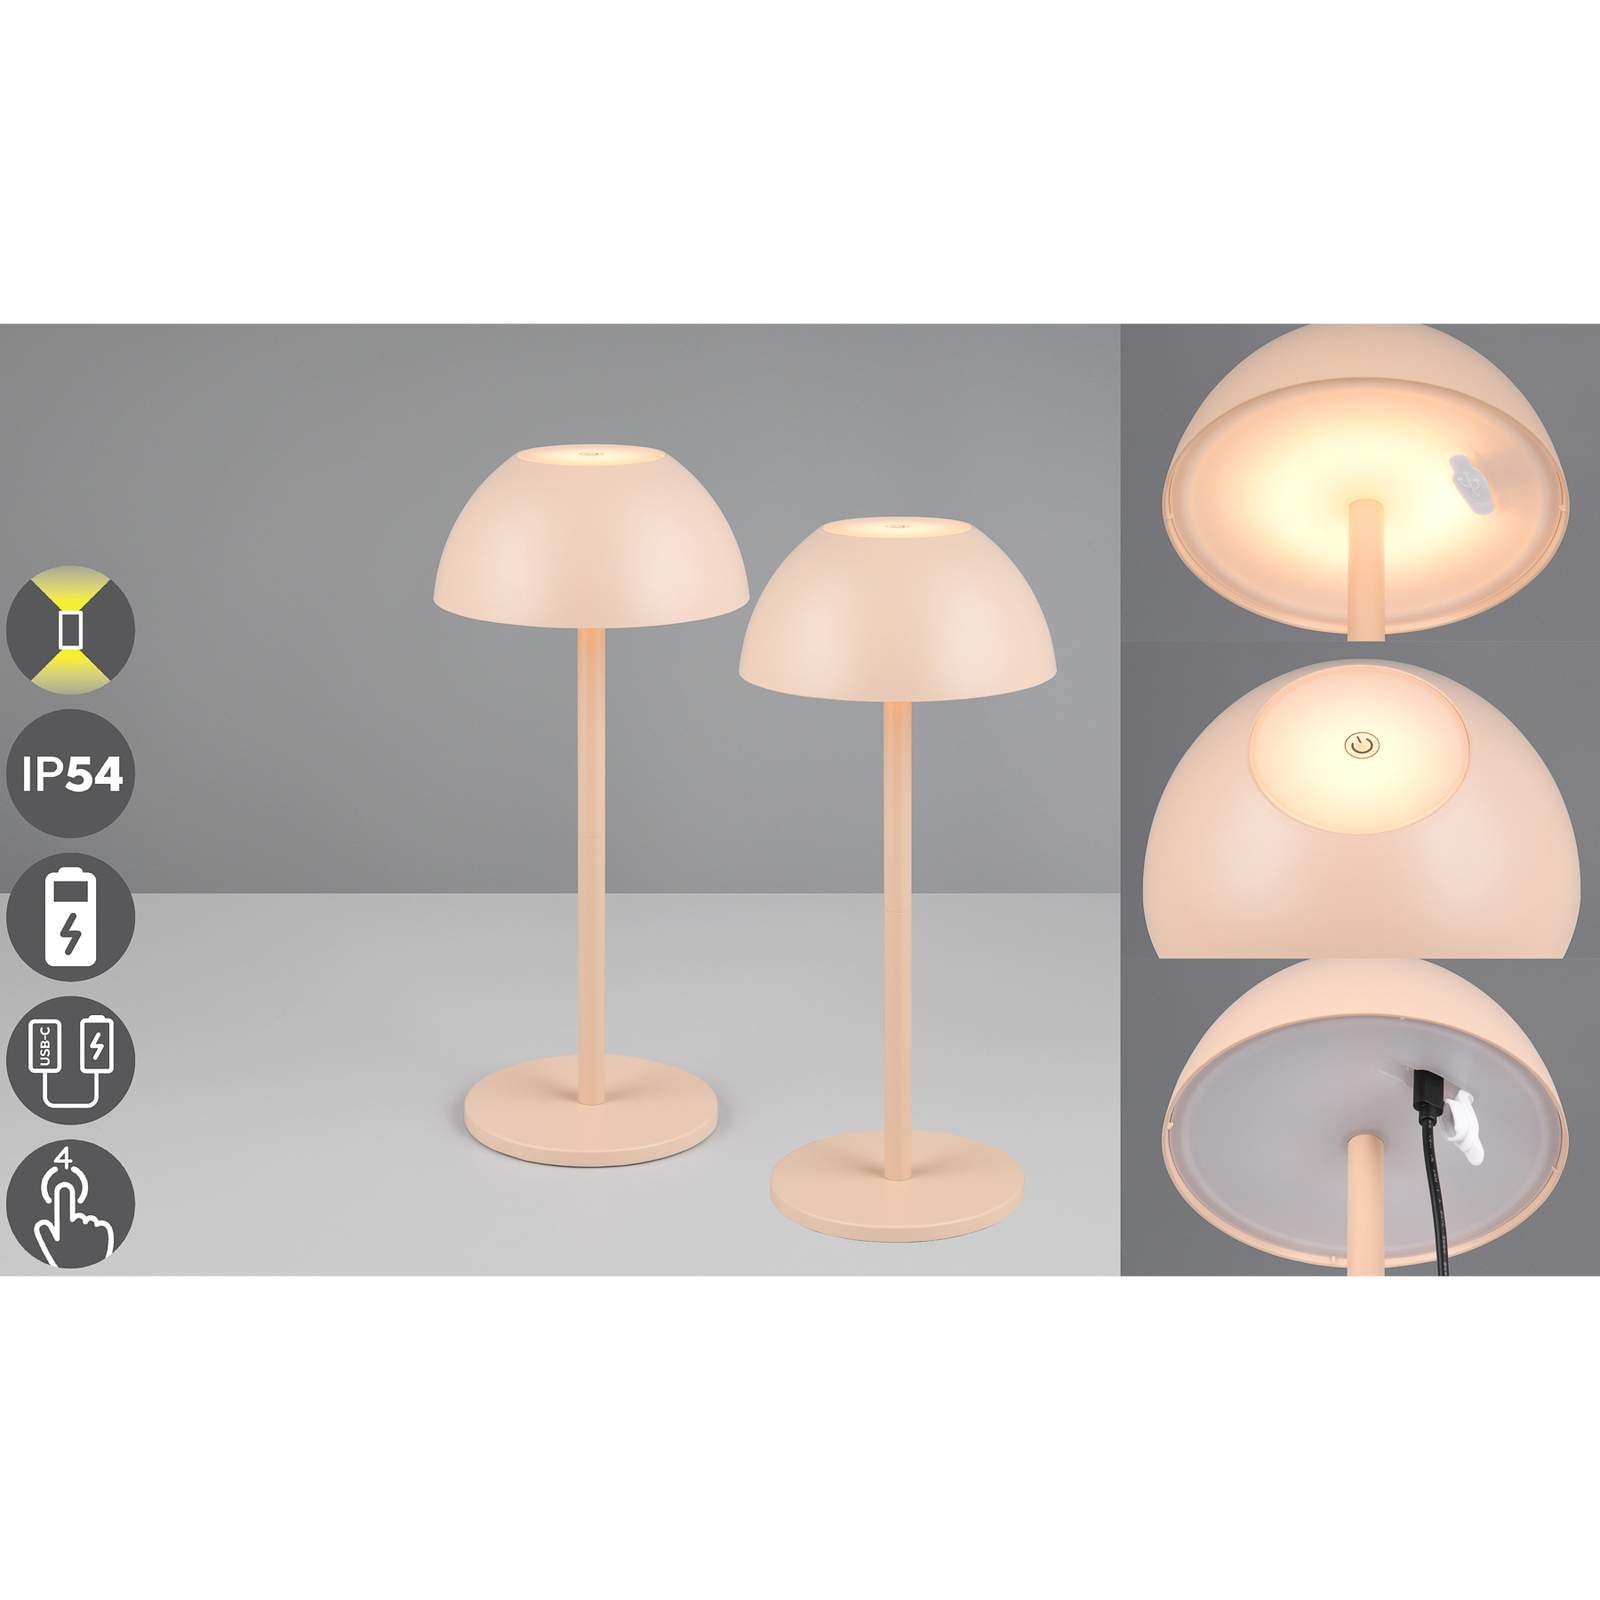 Ricardo lámpara de mesa LED recargable, arena, altura 30 cm, plástico